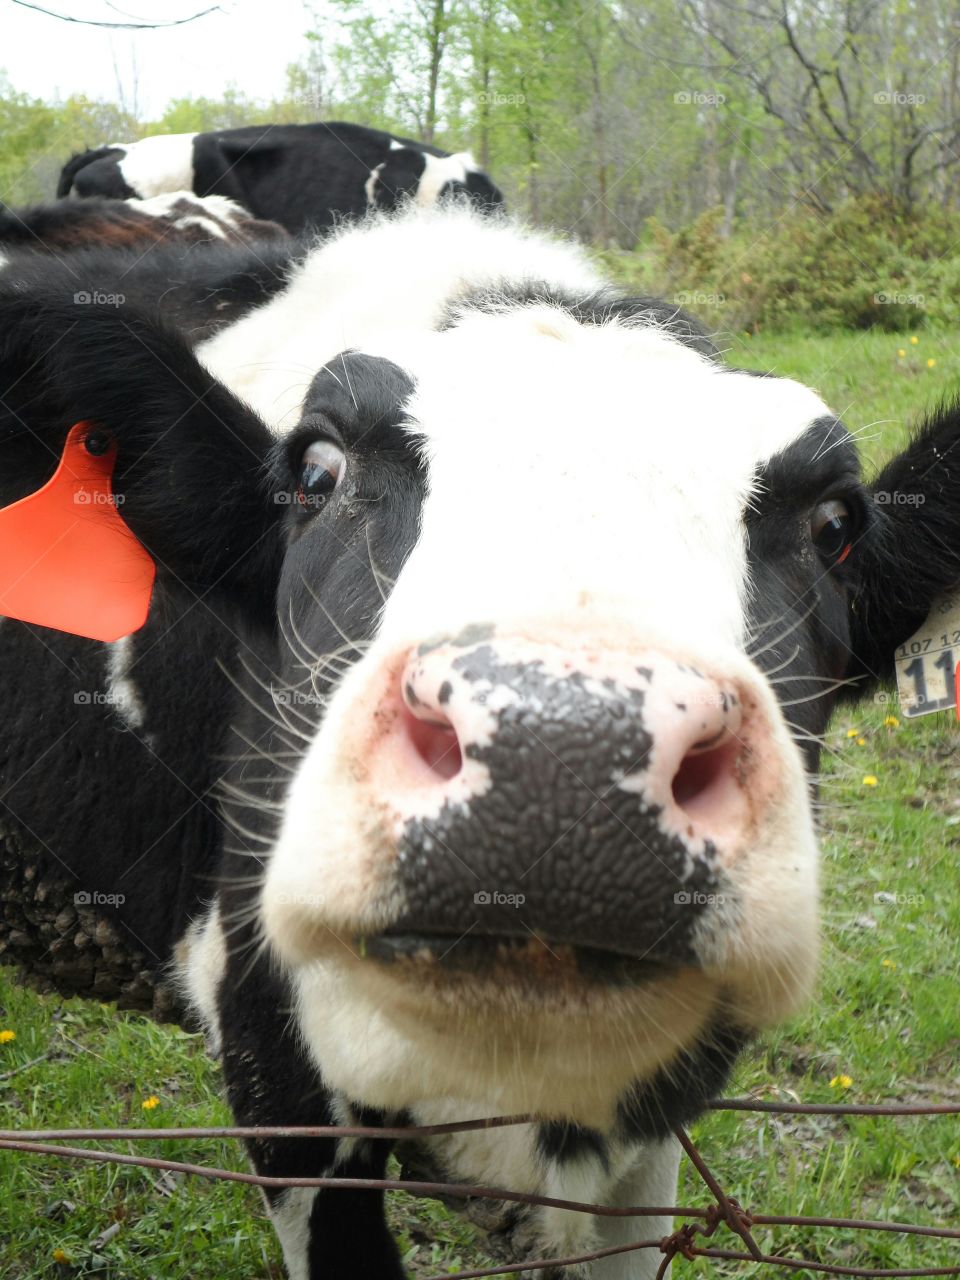 Cow close up. got close up to a cow